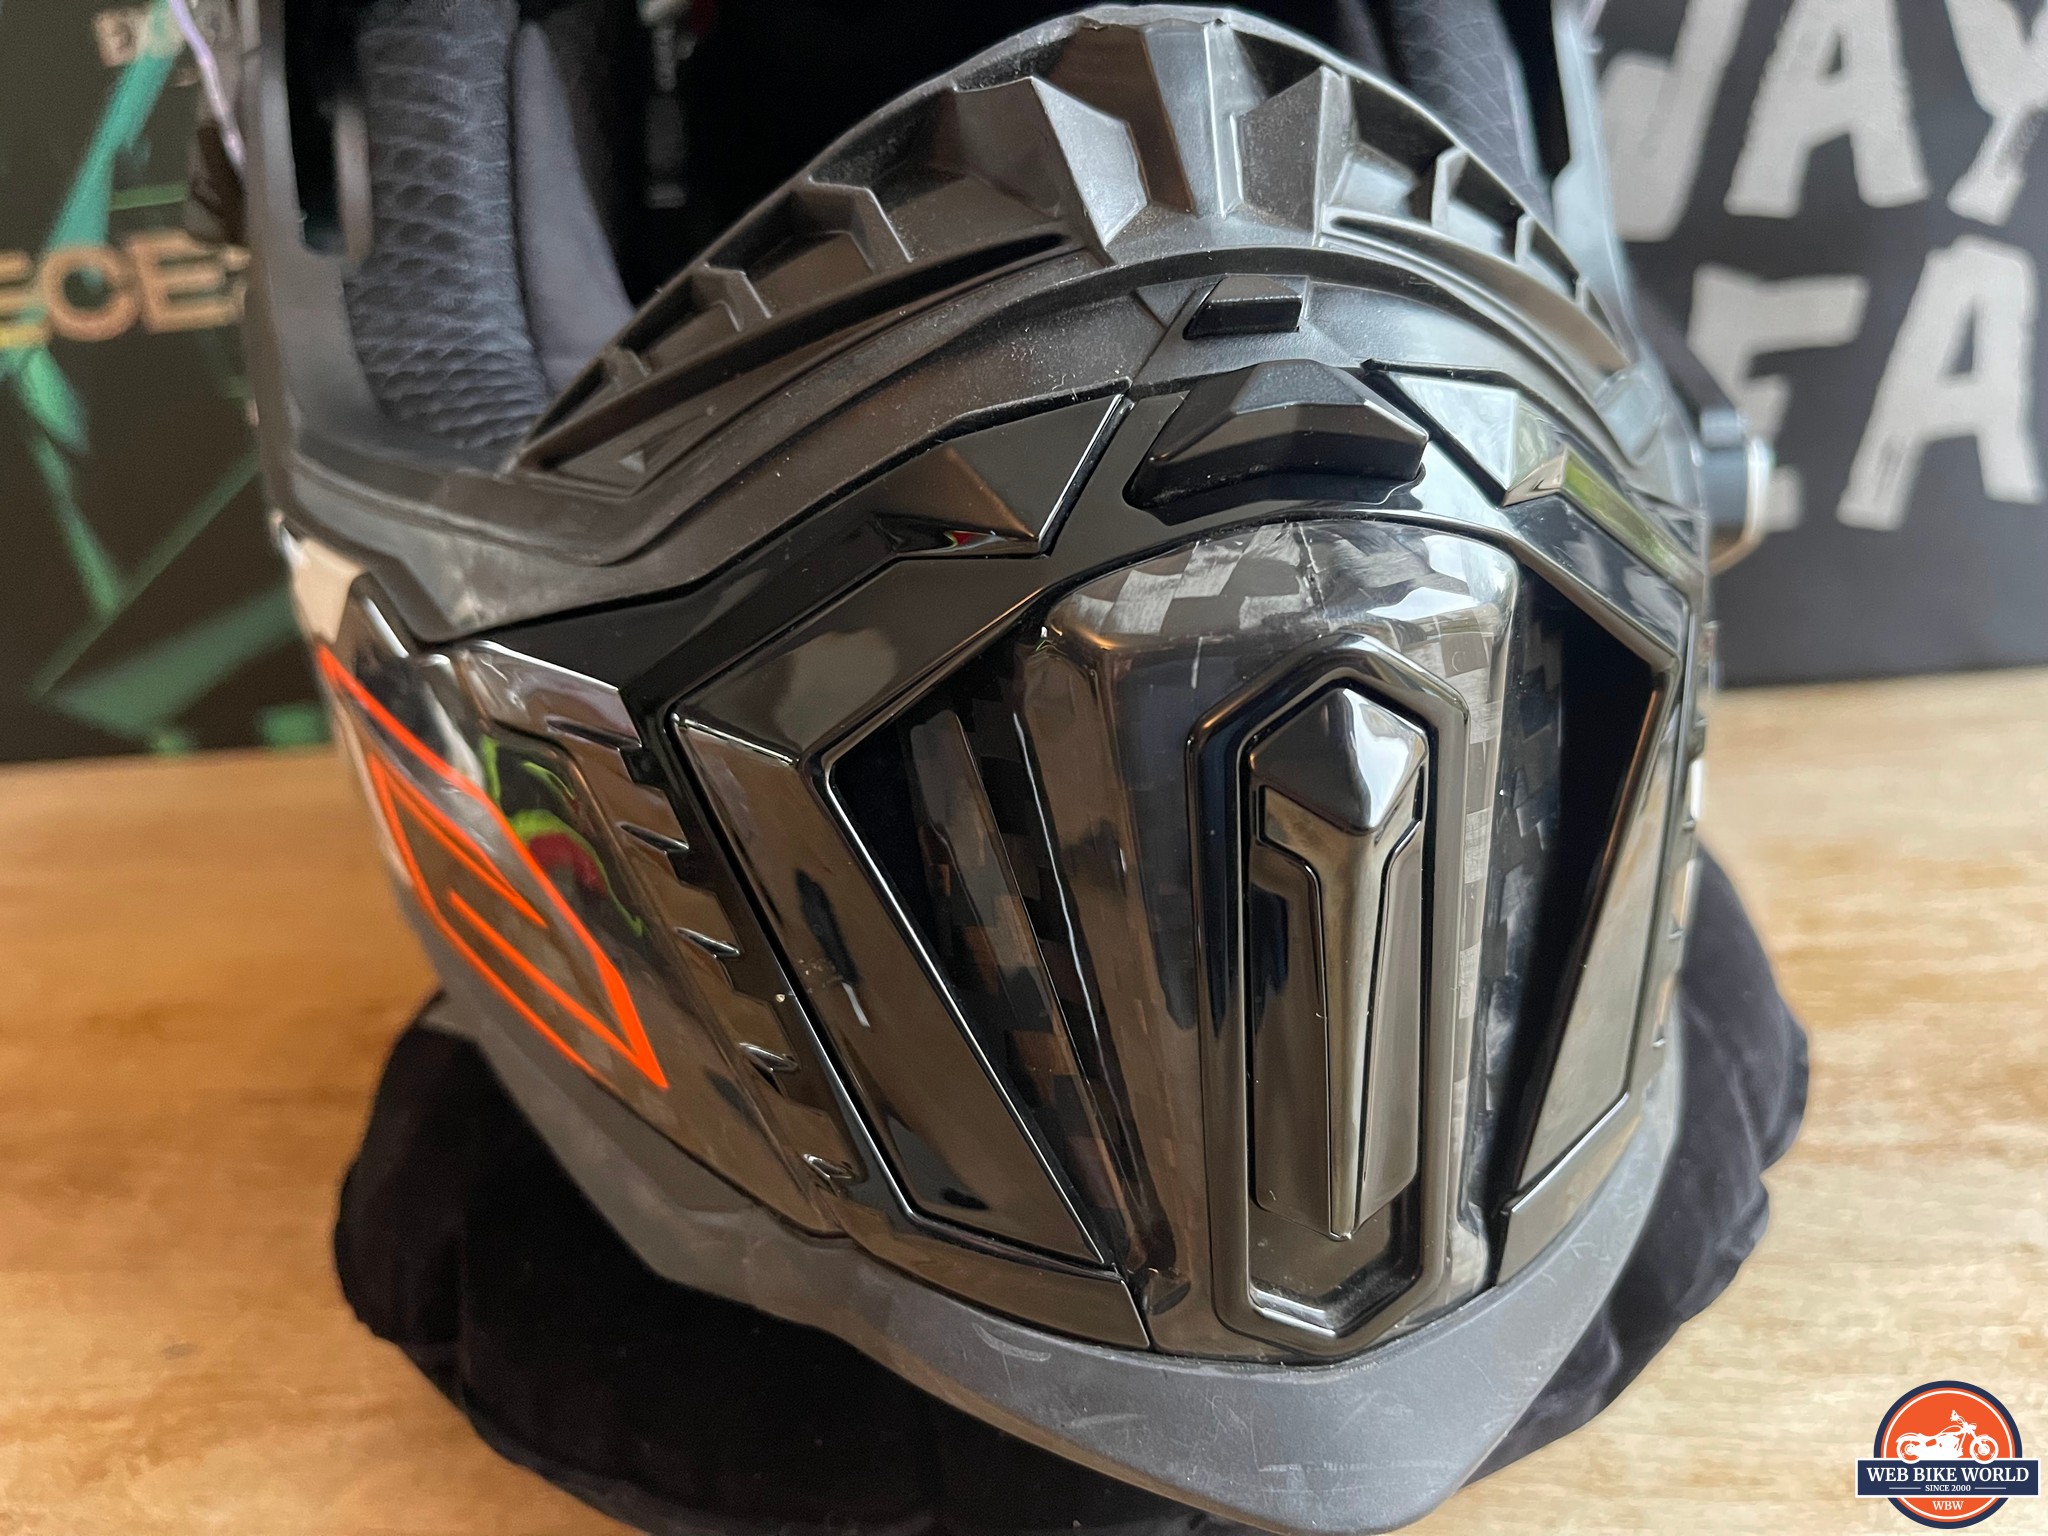 webbikeworld.com] - LS2 Explorer Carbon Helmet Hands-On Review 